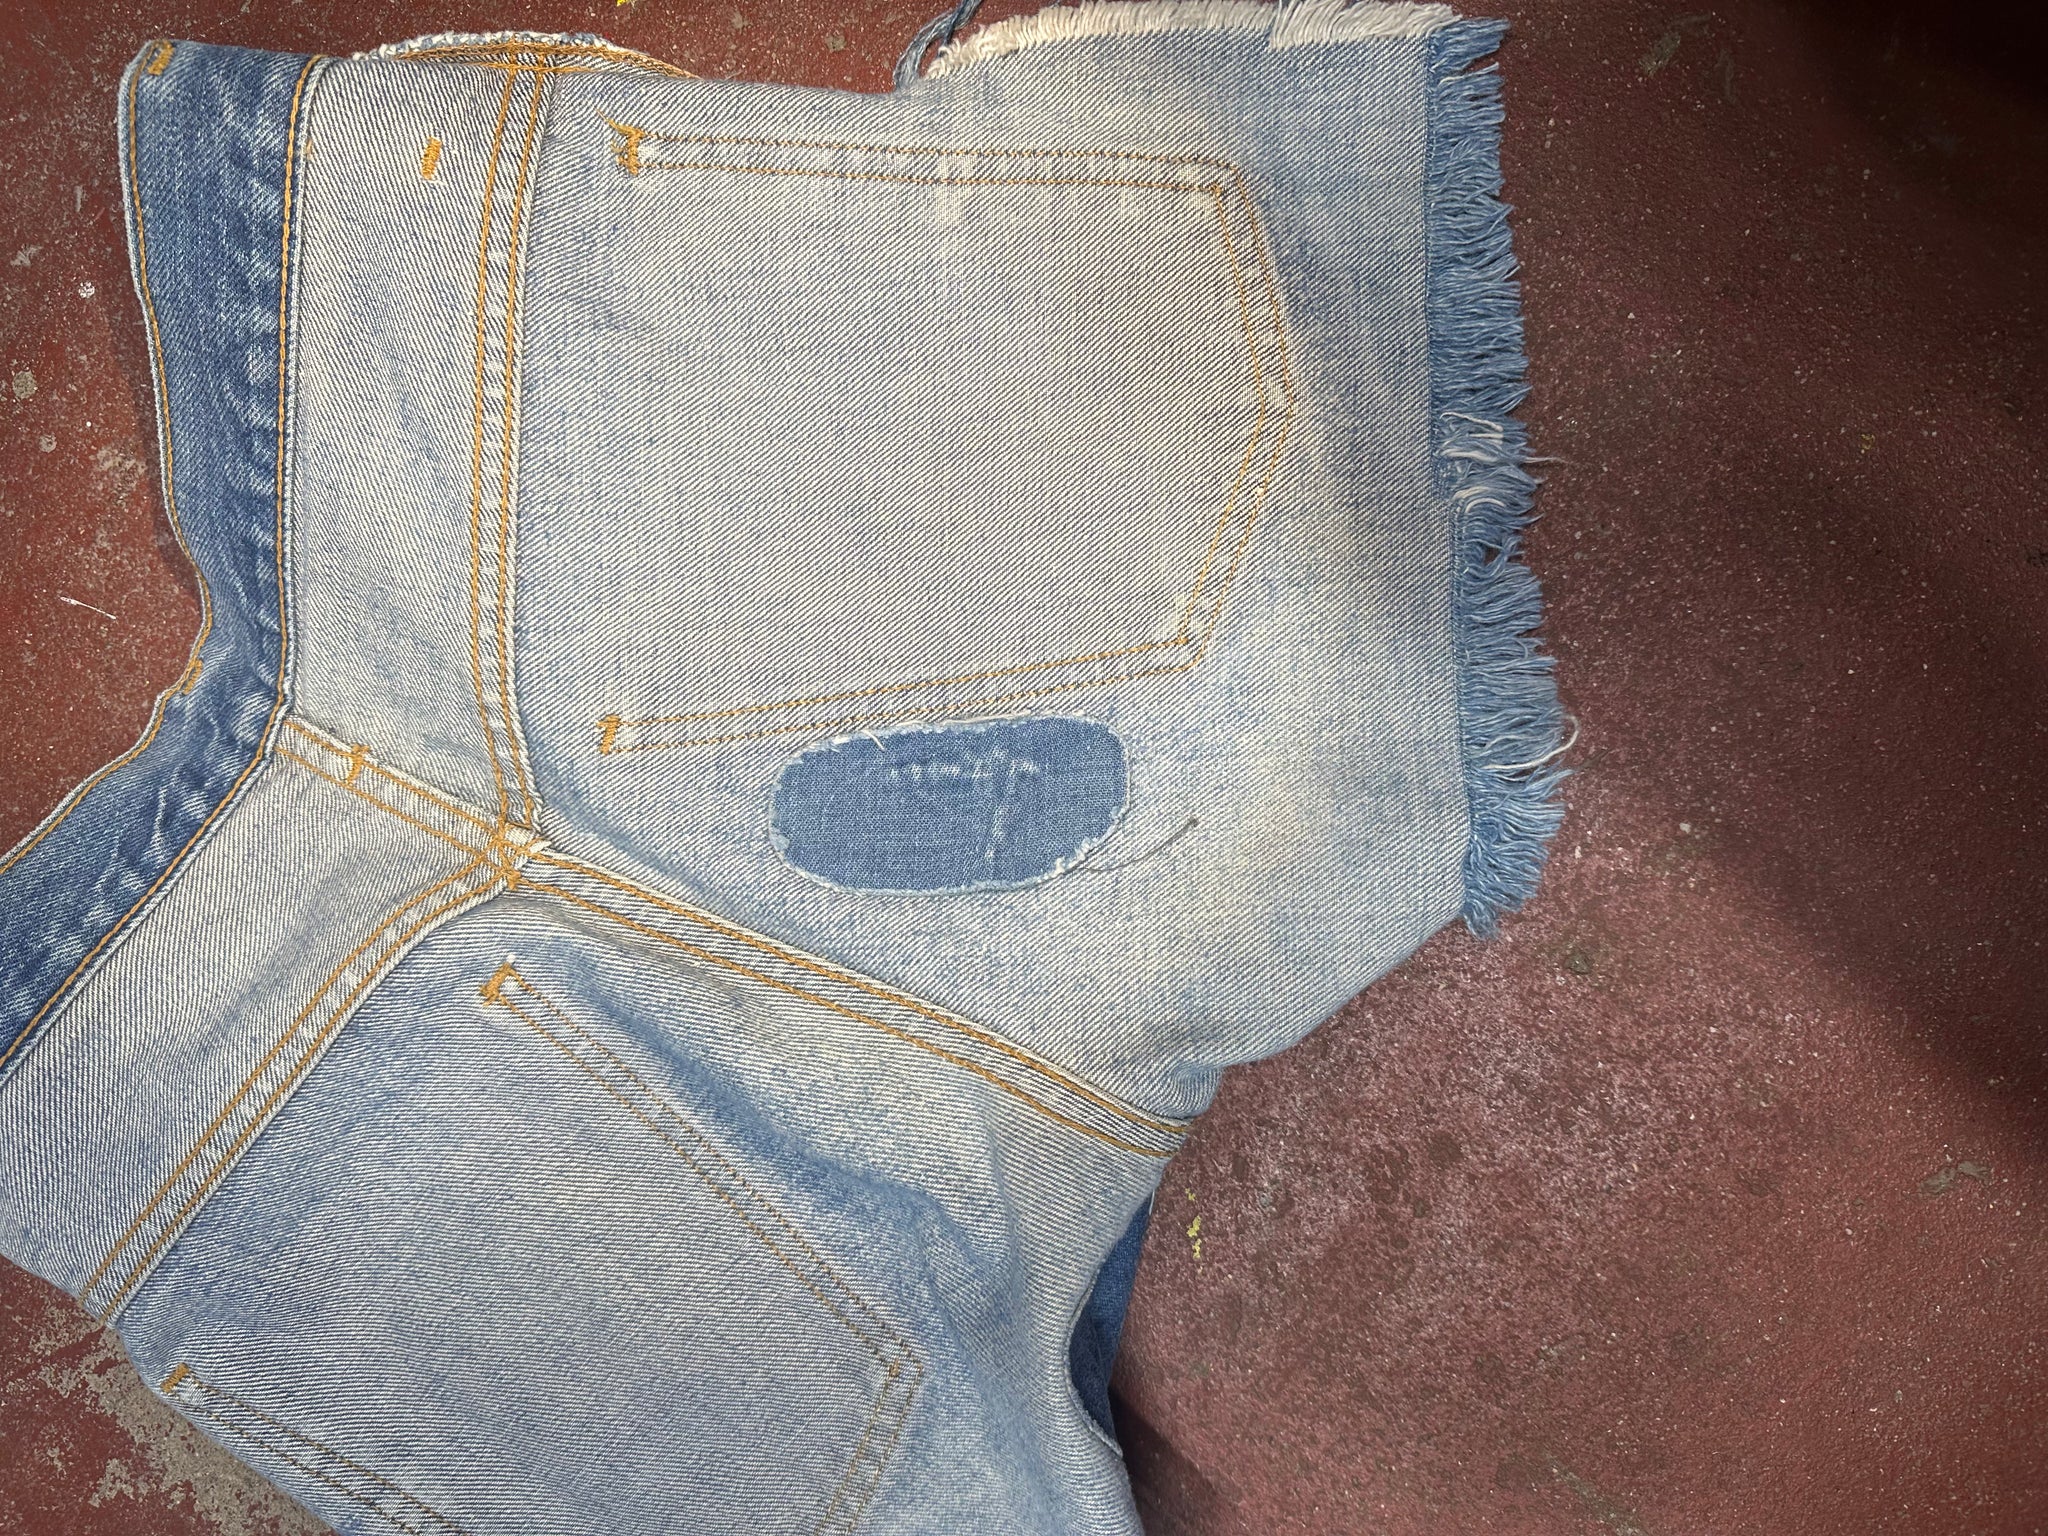 Vintage Big J Brand Sample Shorts with sample tags (JYJ-204)